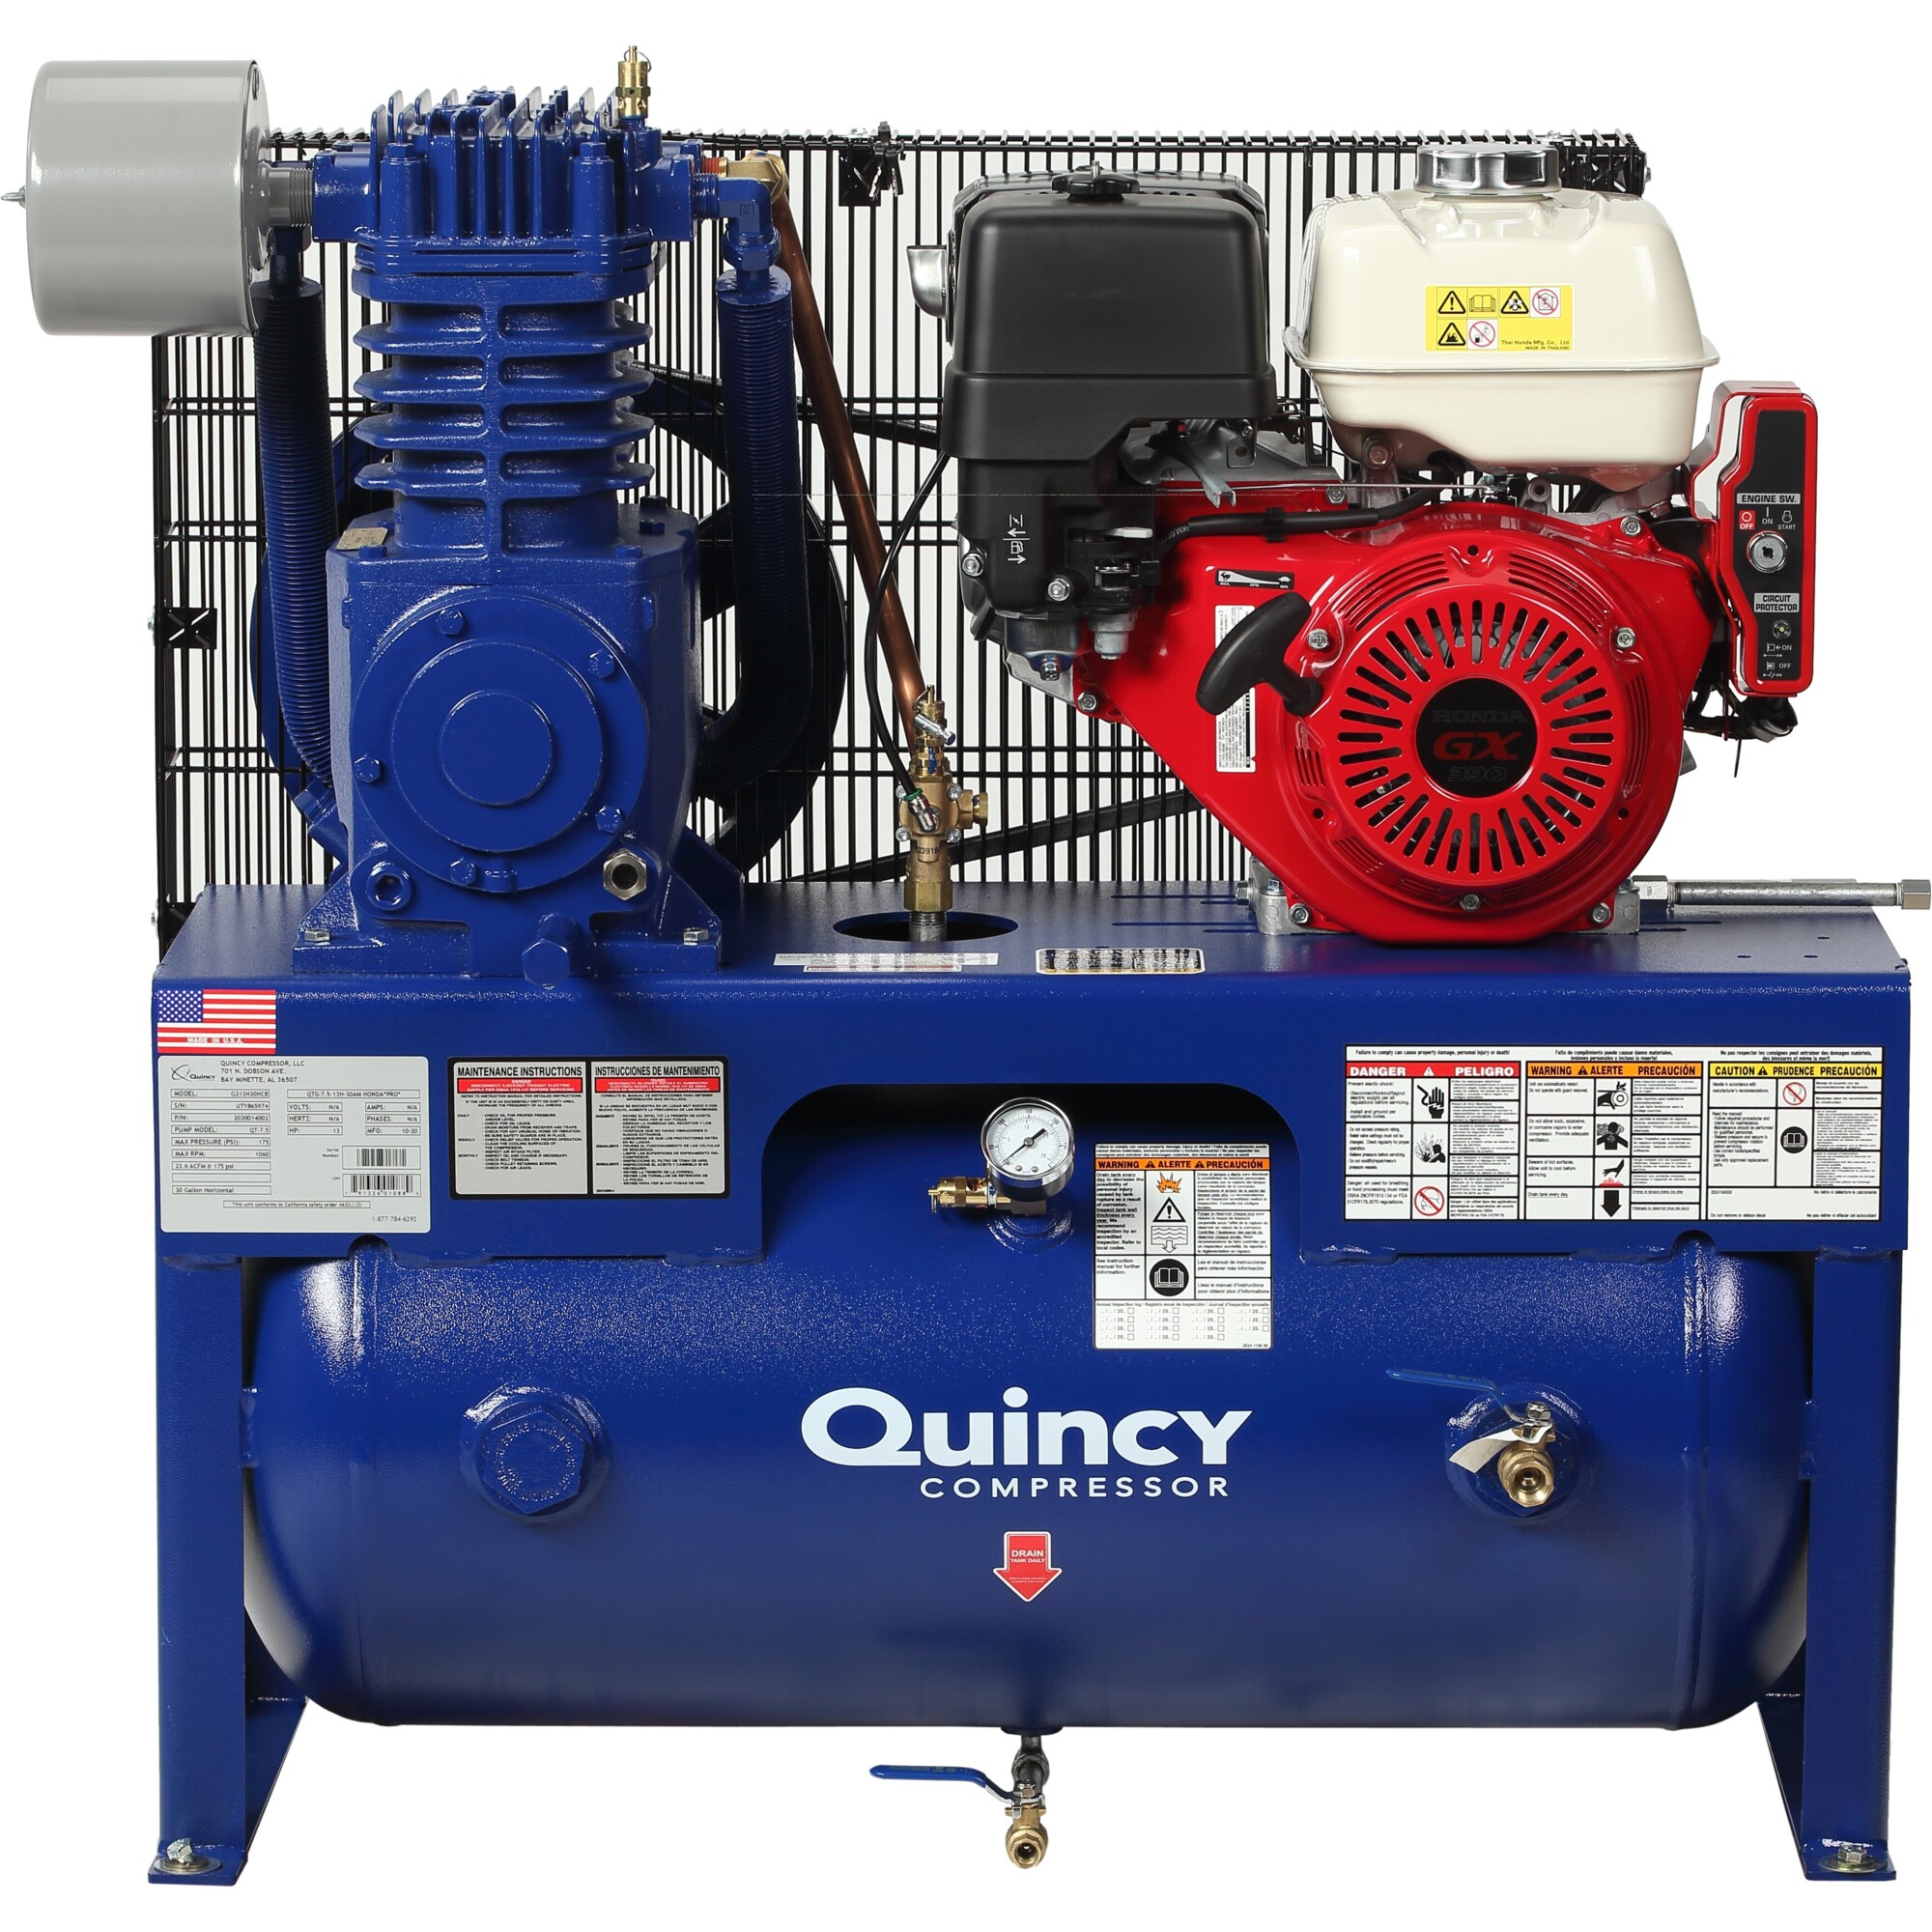 Quincy Compressor, QT 13H 30G 2Stg Air Compressor (Honda) Horiz, Horsepower 13 HP, Air Tank Size 30 Gal, Model G413H30HCB